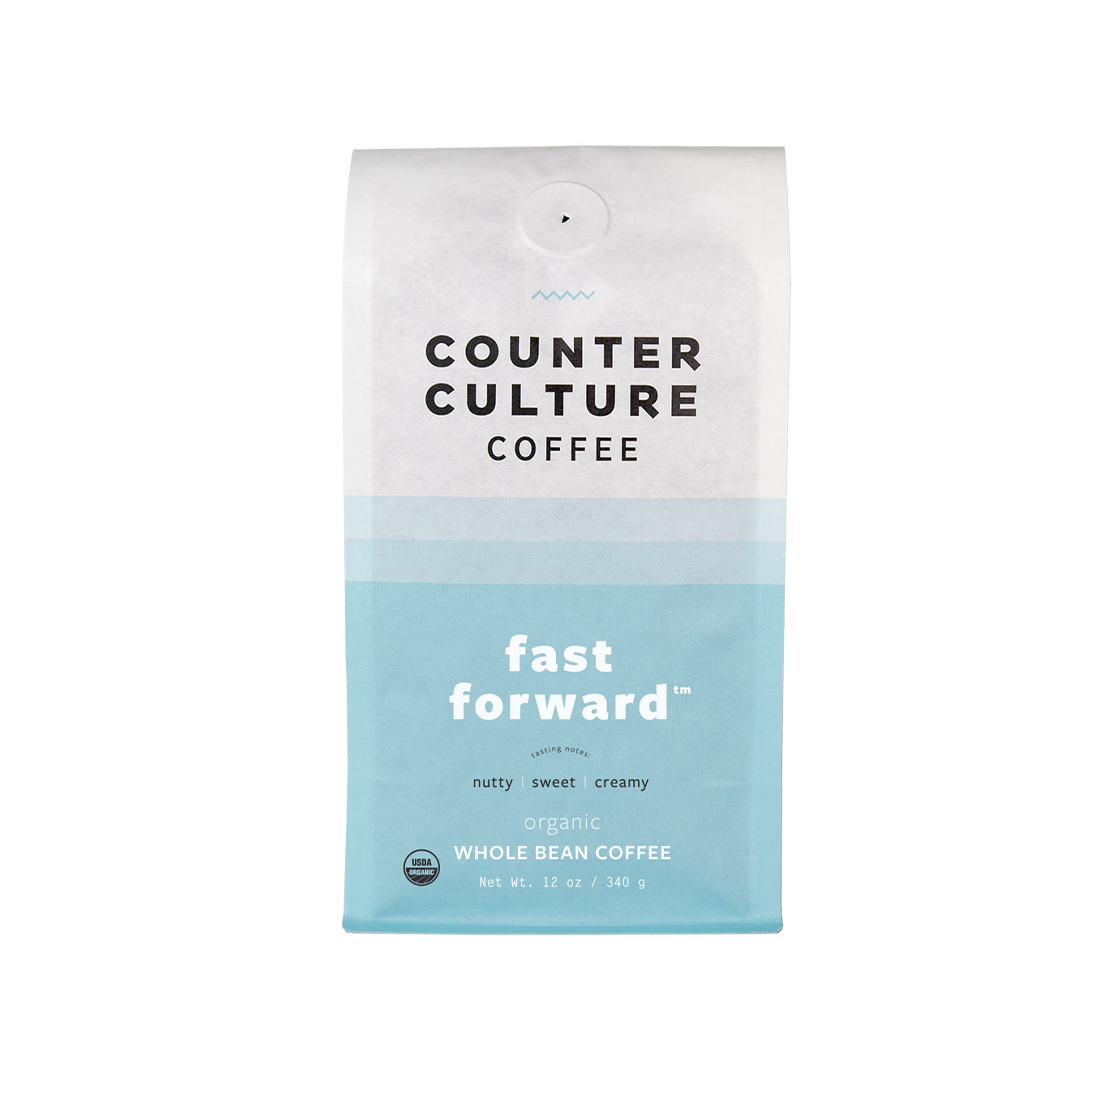 Counter Culture Coffee - Fast Forward